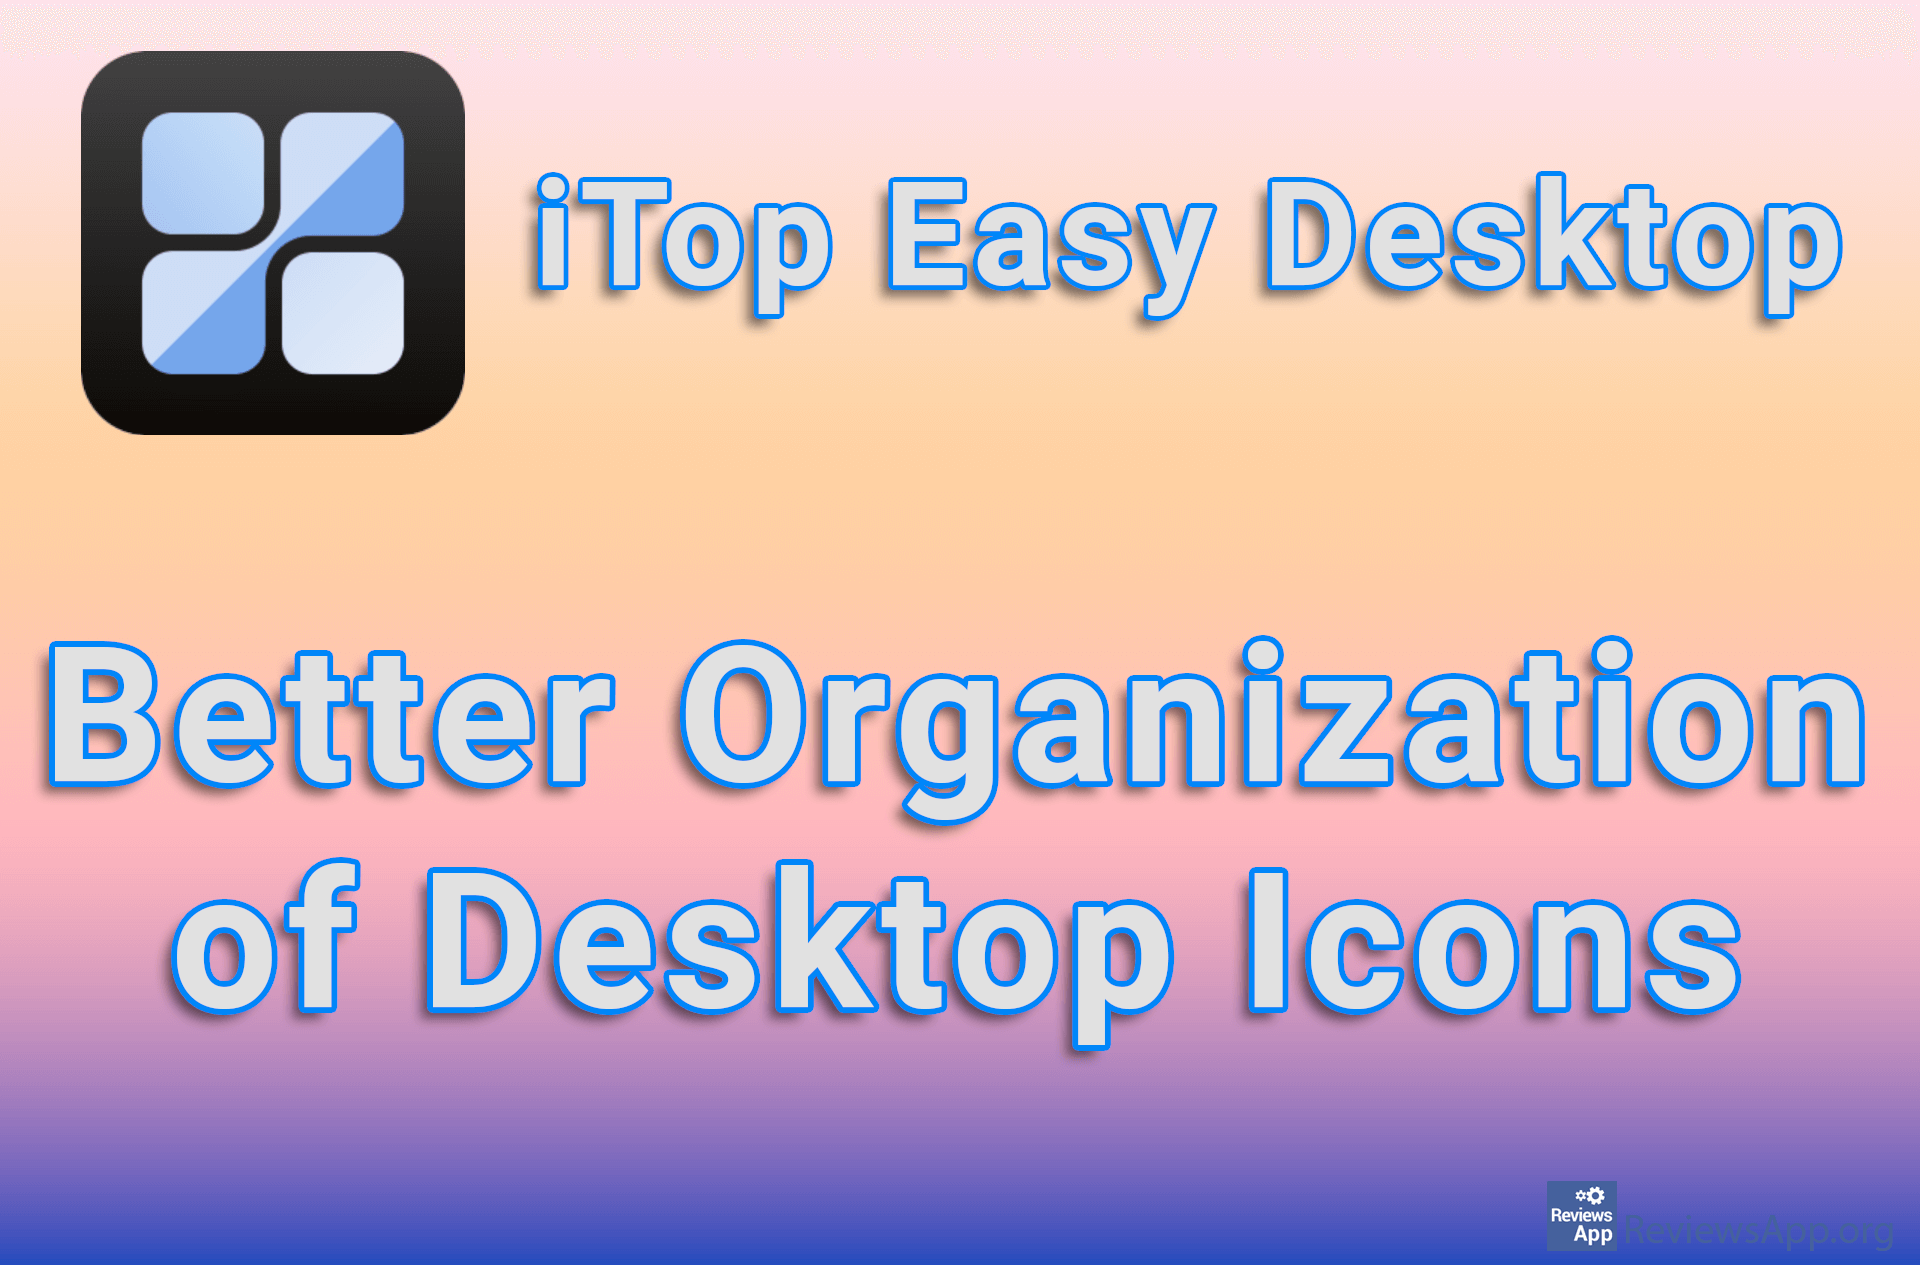 iTop Easy Desktop – Better Organization of Desktop Icons